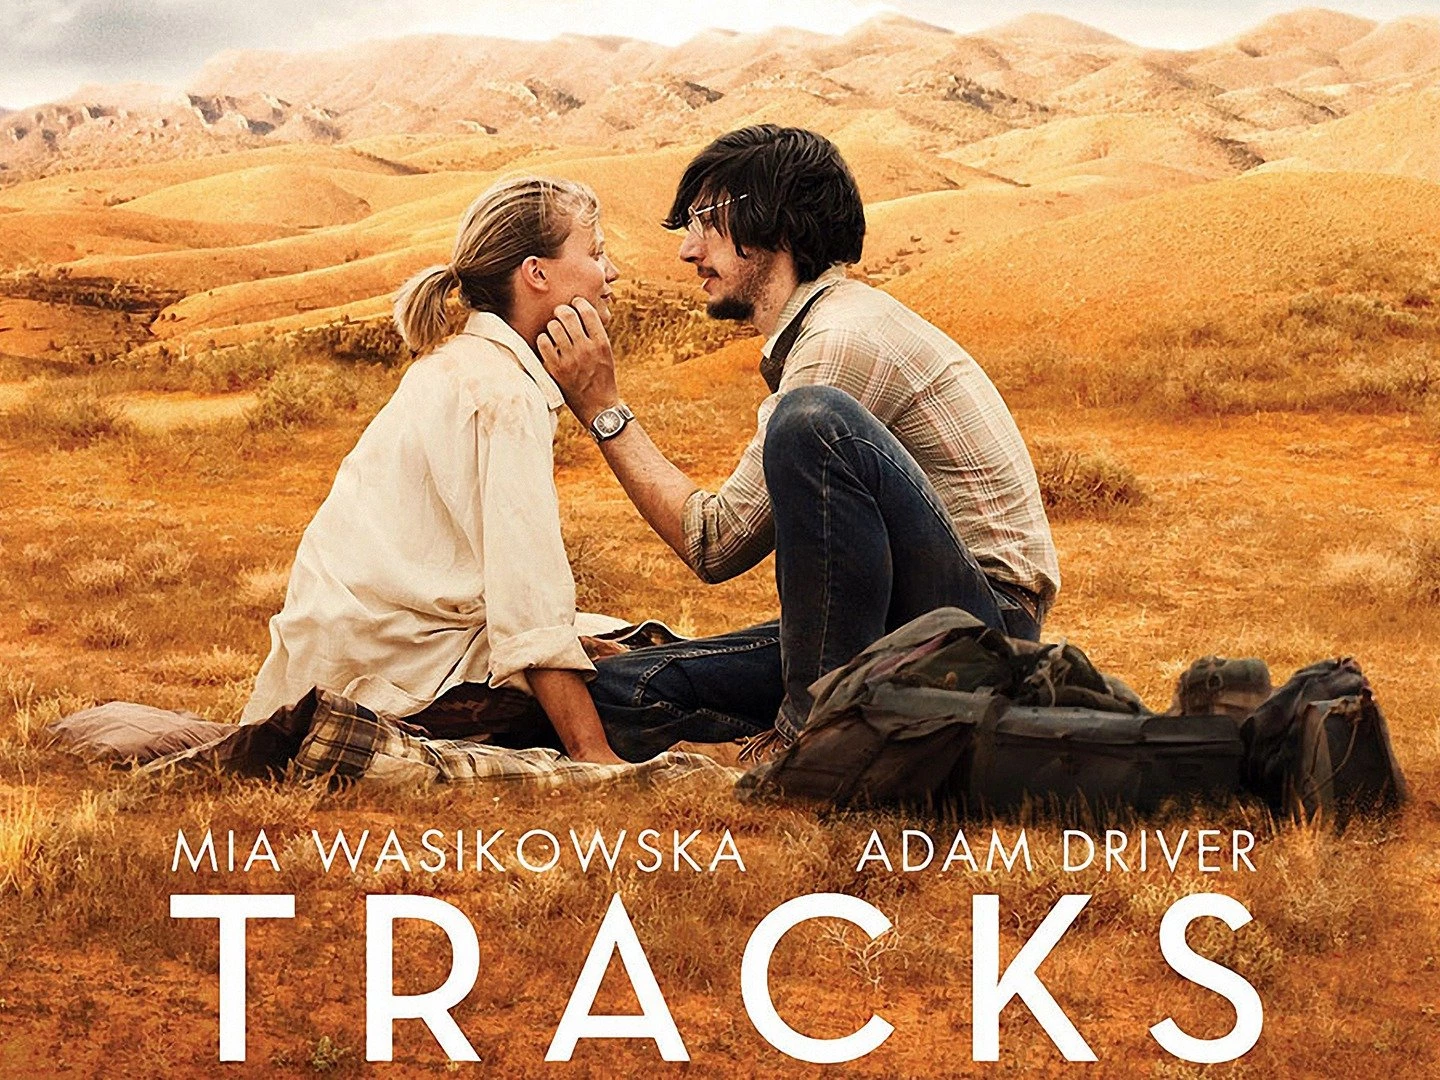 movies like eat pray love - Tracks (2013)